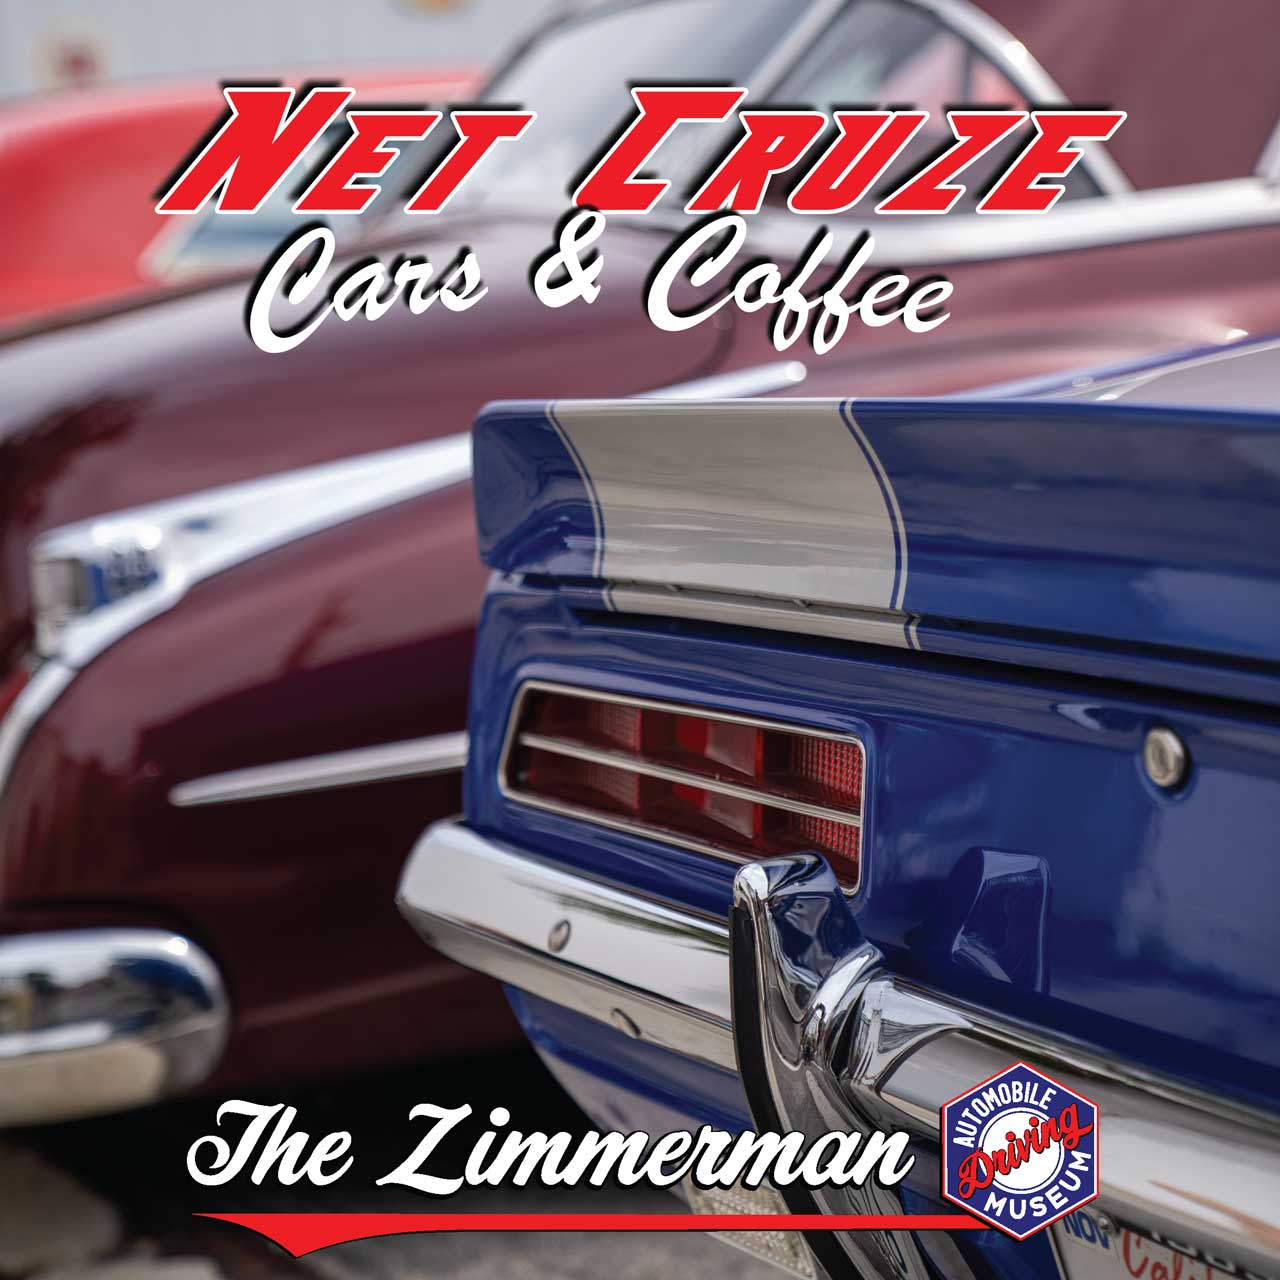 Net Cruze Cars & Coffee